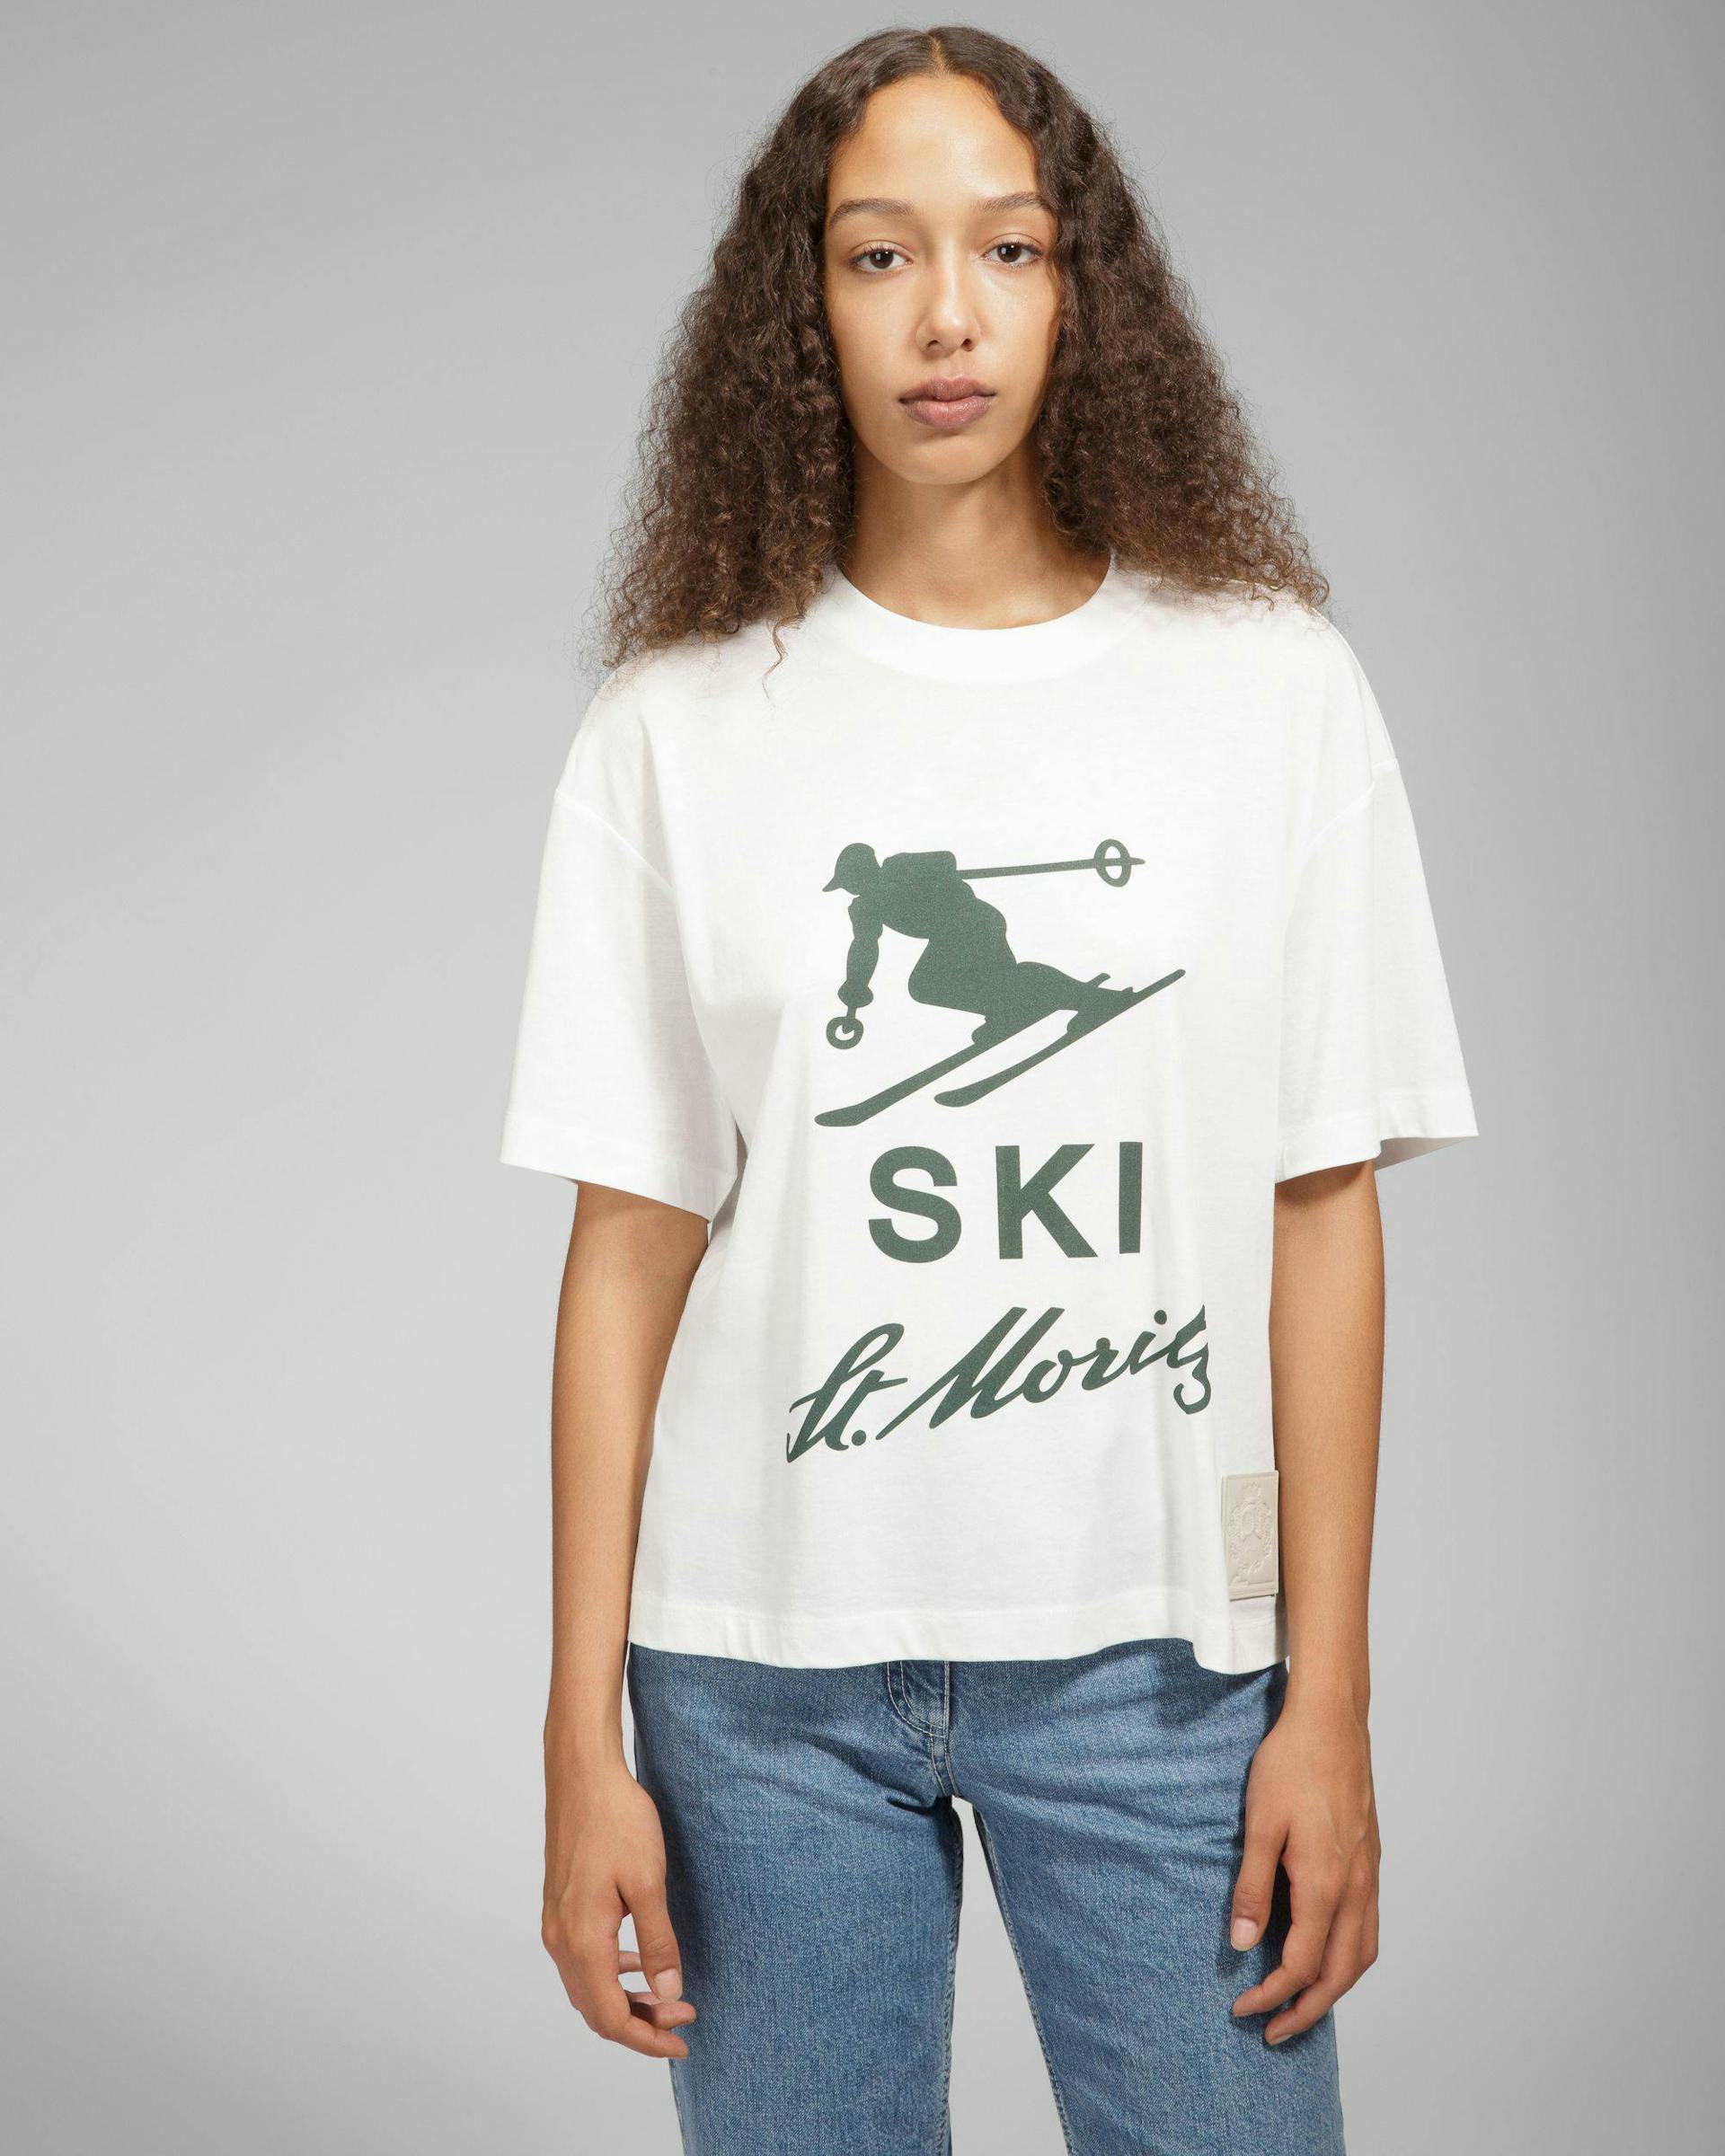 T-Shirt Ski St. Moritz - Bally